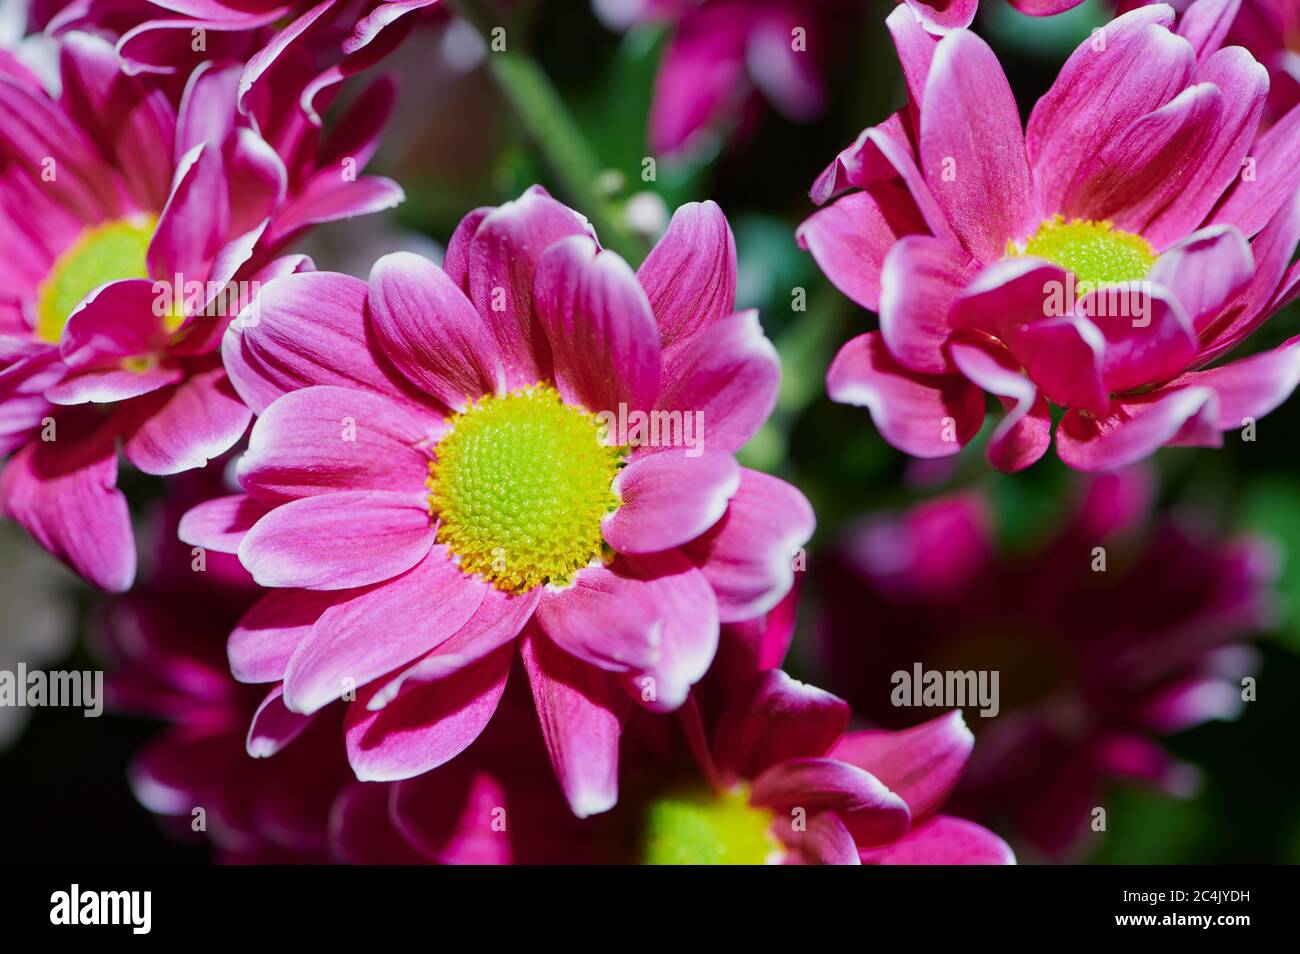 Rosa Chrysanthemen Makro Foto, helle Farbe Foto Stockfoto